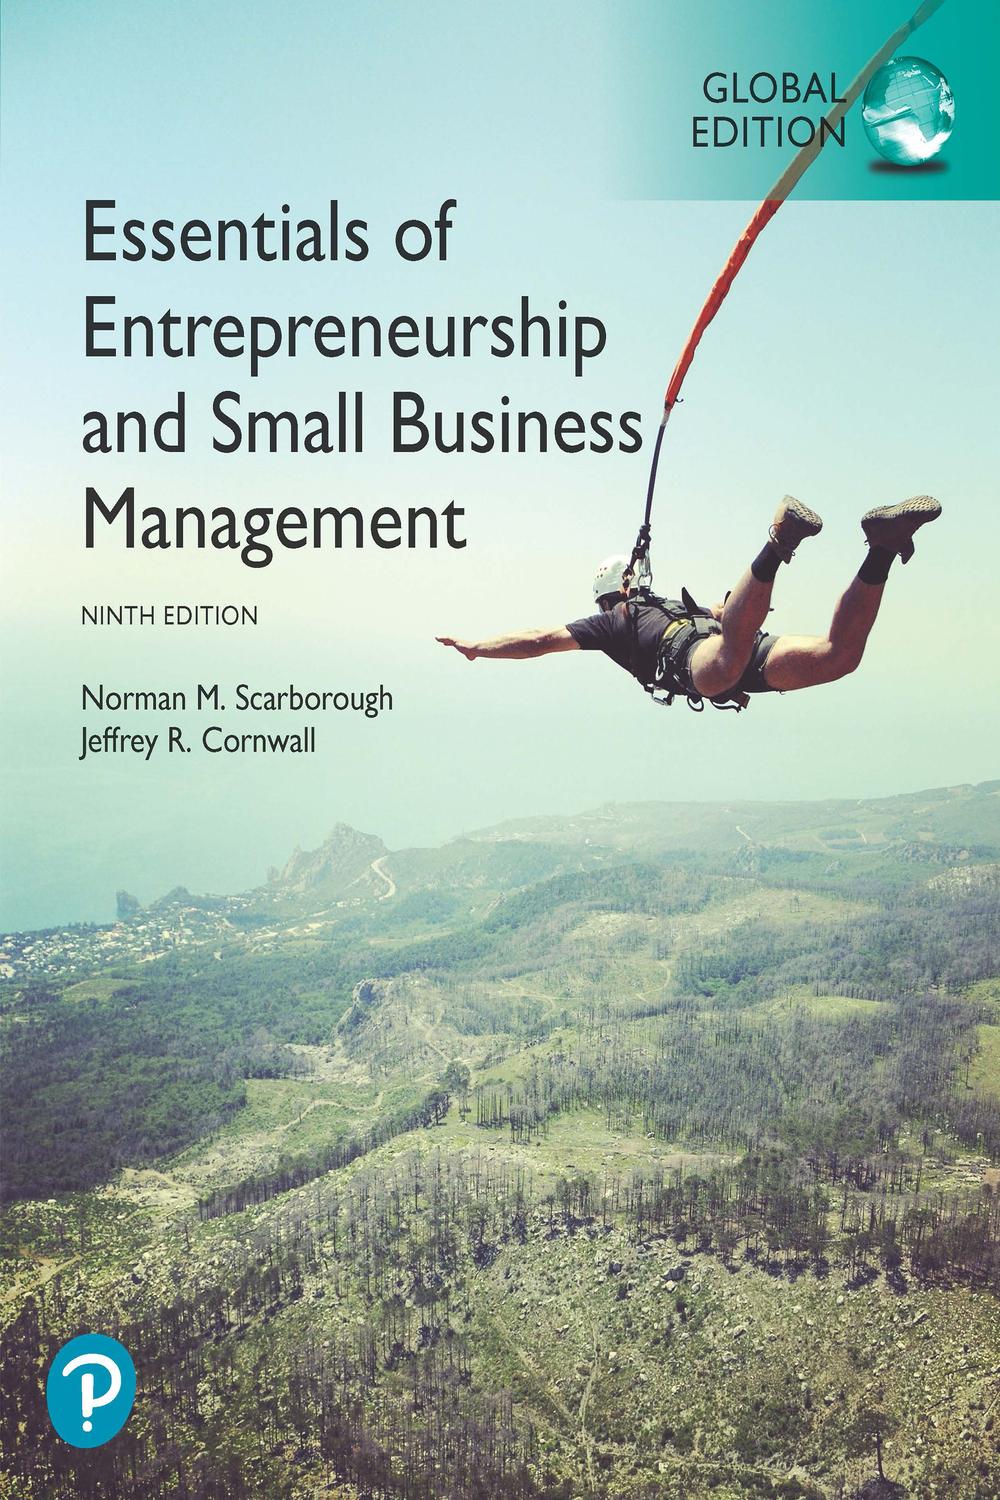 entrepreneurship and business plan pdf